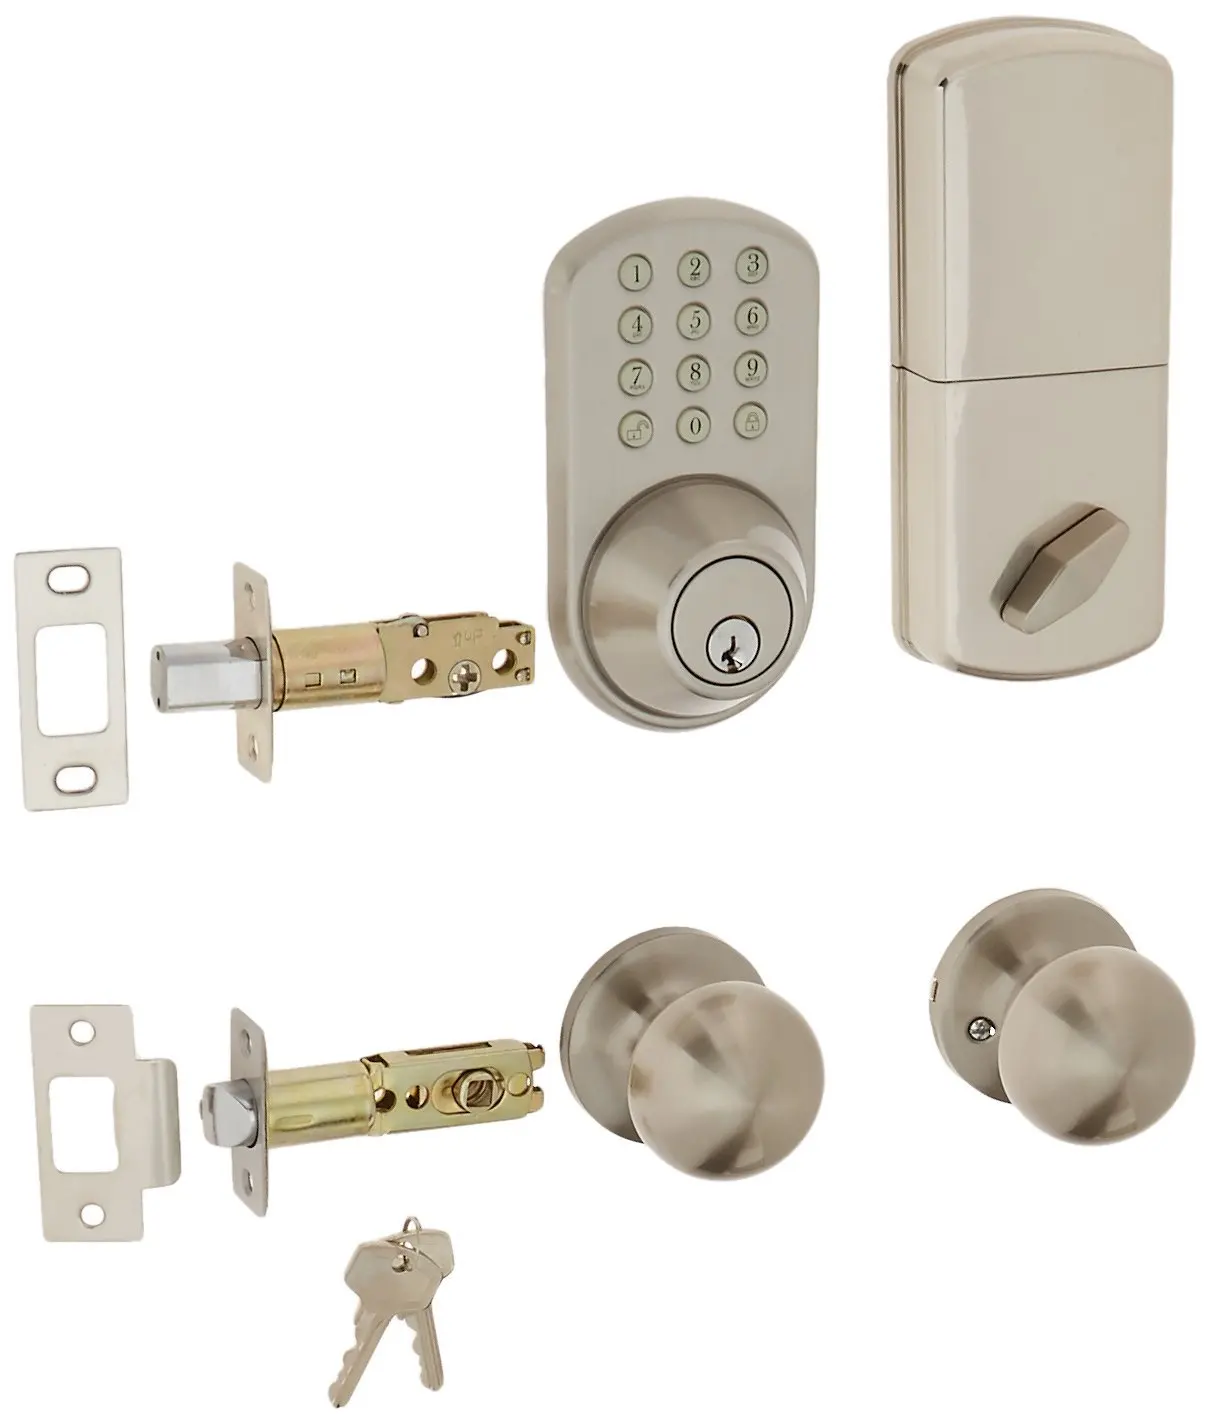 remote keyless entry house door locks